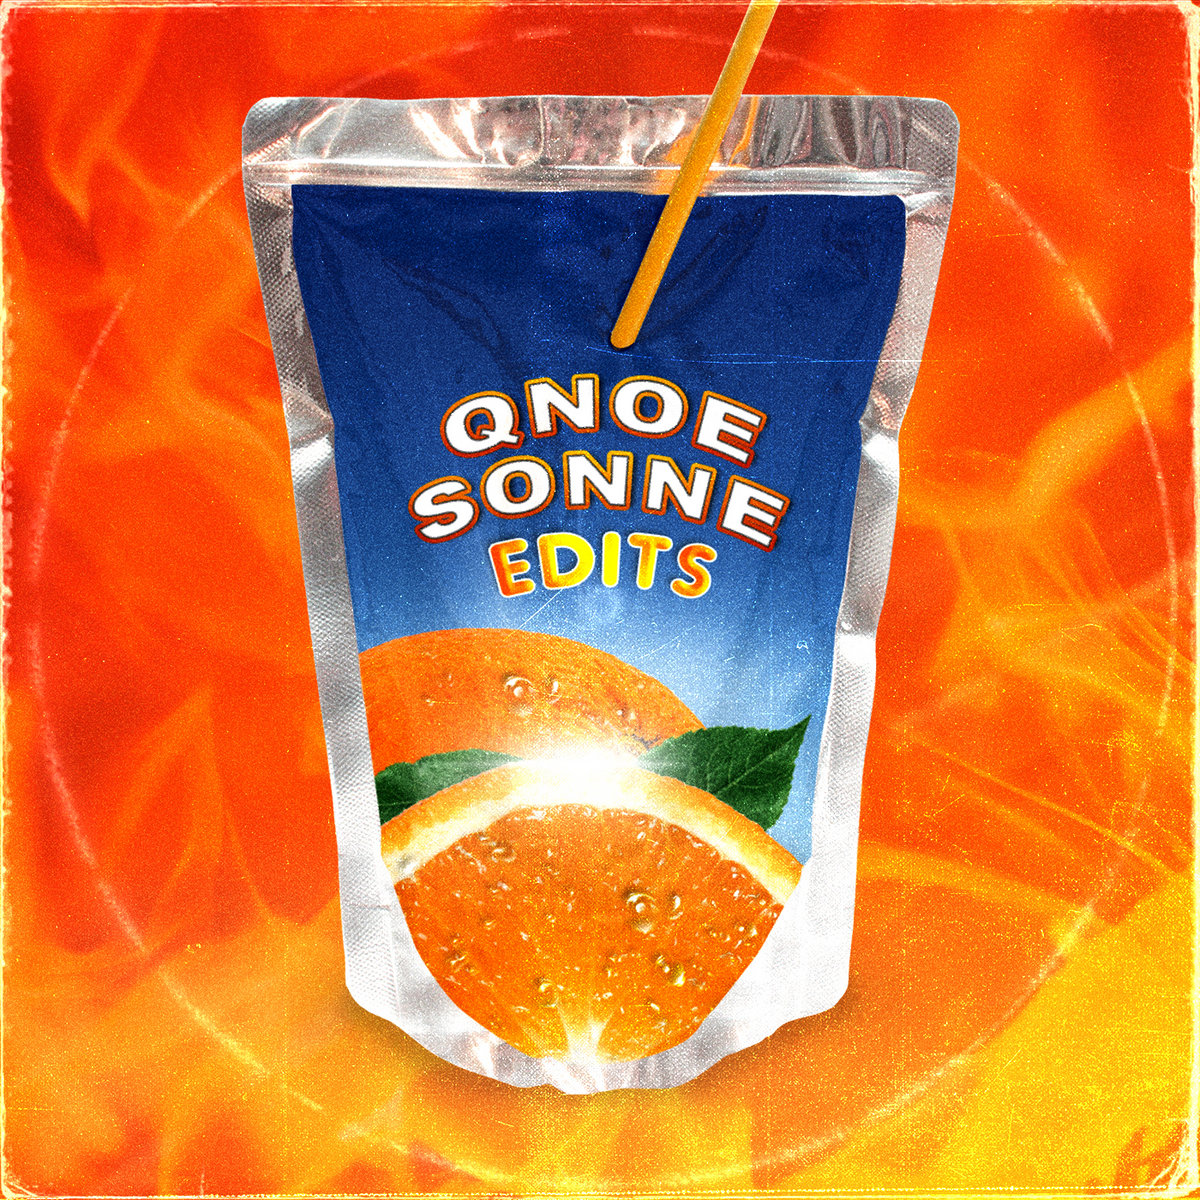 QNOE celebrates the sunny days with new edit pack "QNOE SONNE EDITS"